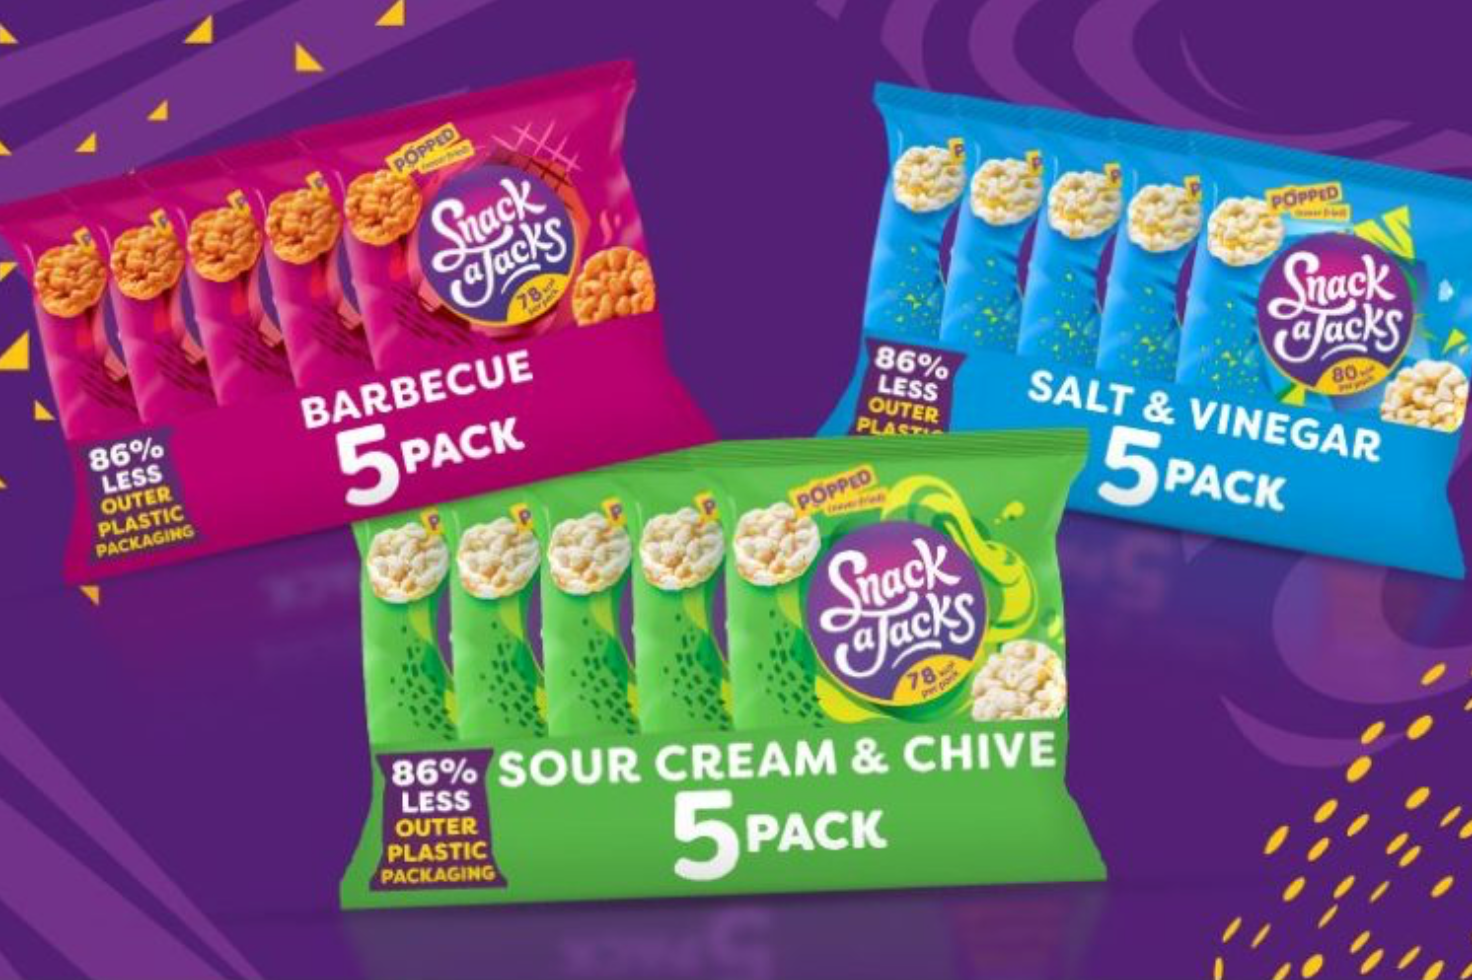 New bagless multipacks for Snack A Jacks credit PepsiCo